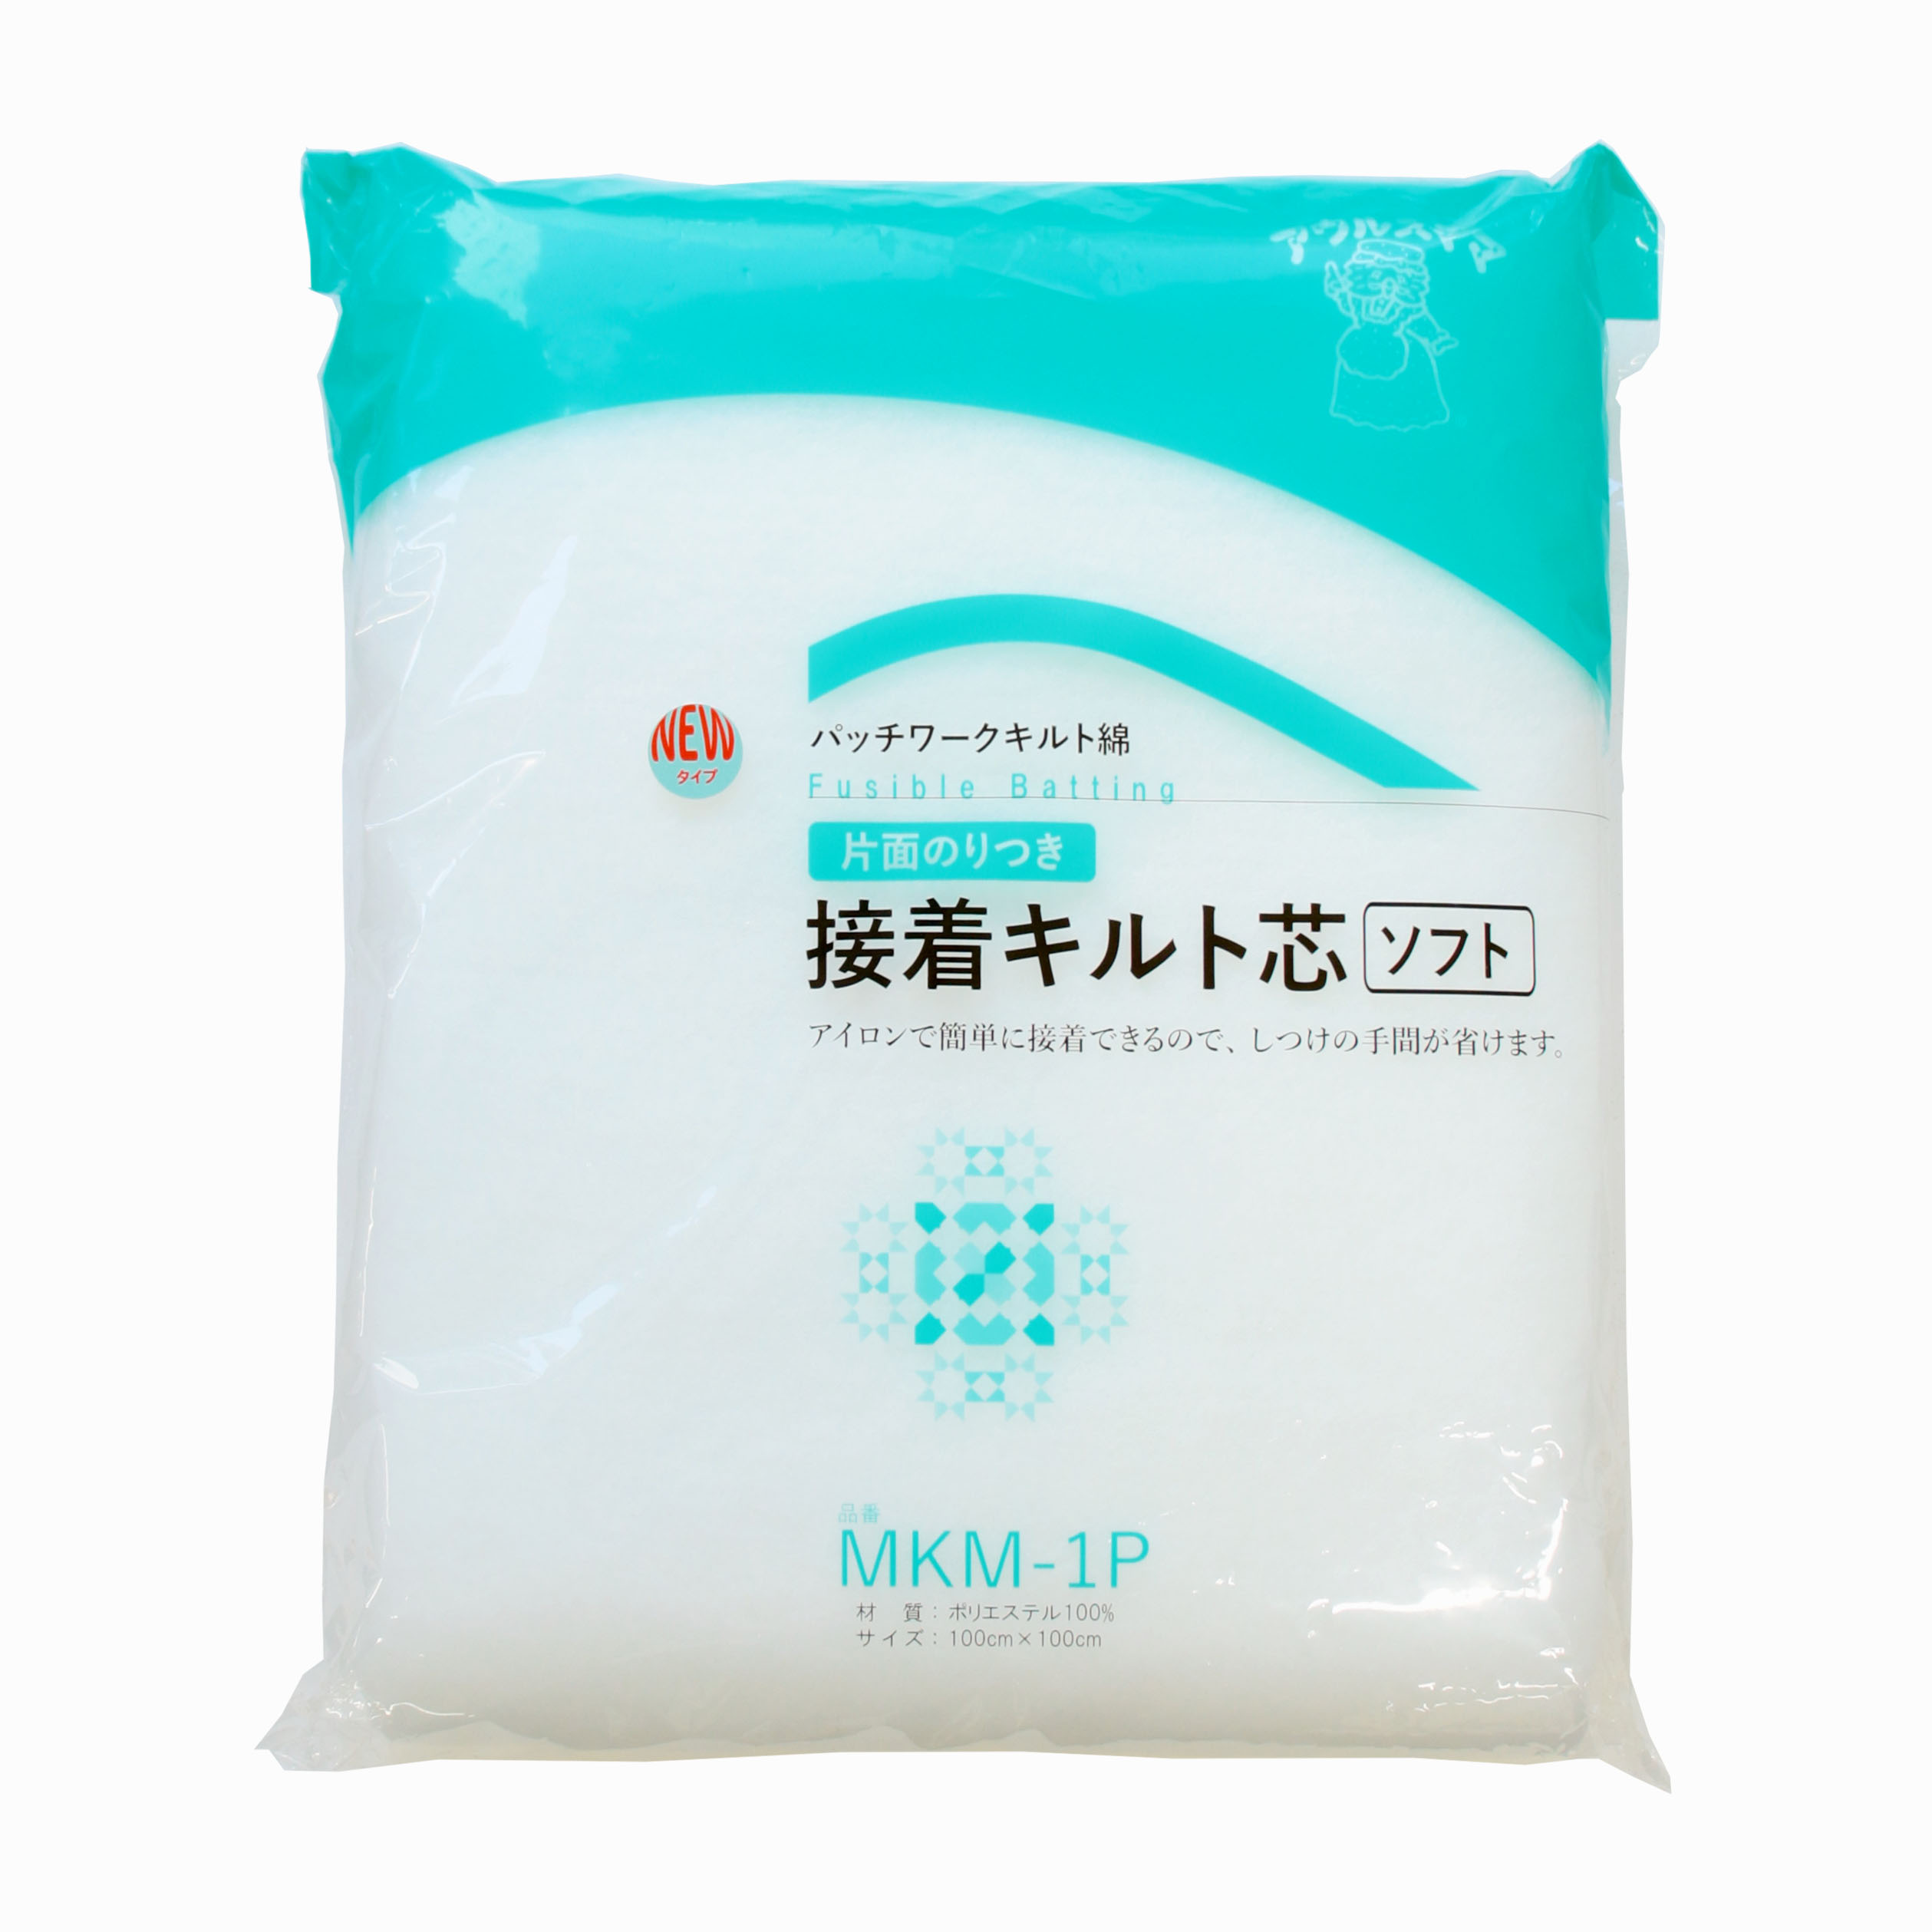 MKM-1P Single-Sided Glue Adhesive Quilt Core Soft 100cm x 100cm White (bag)